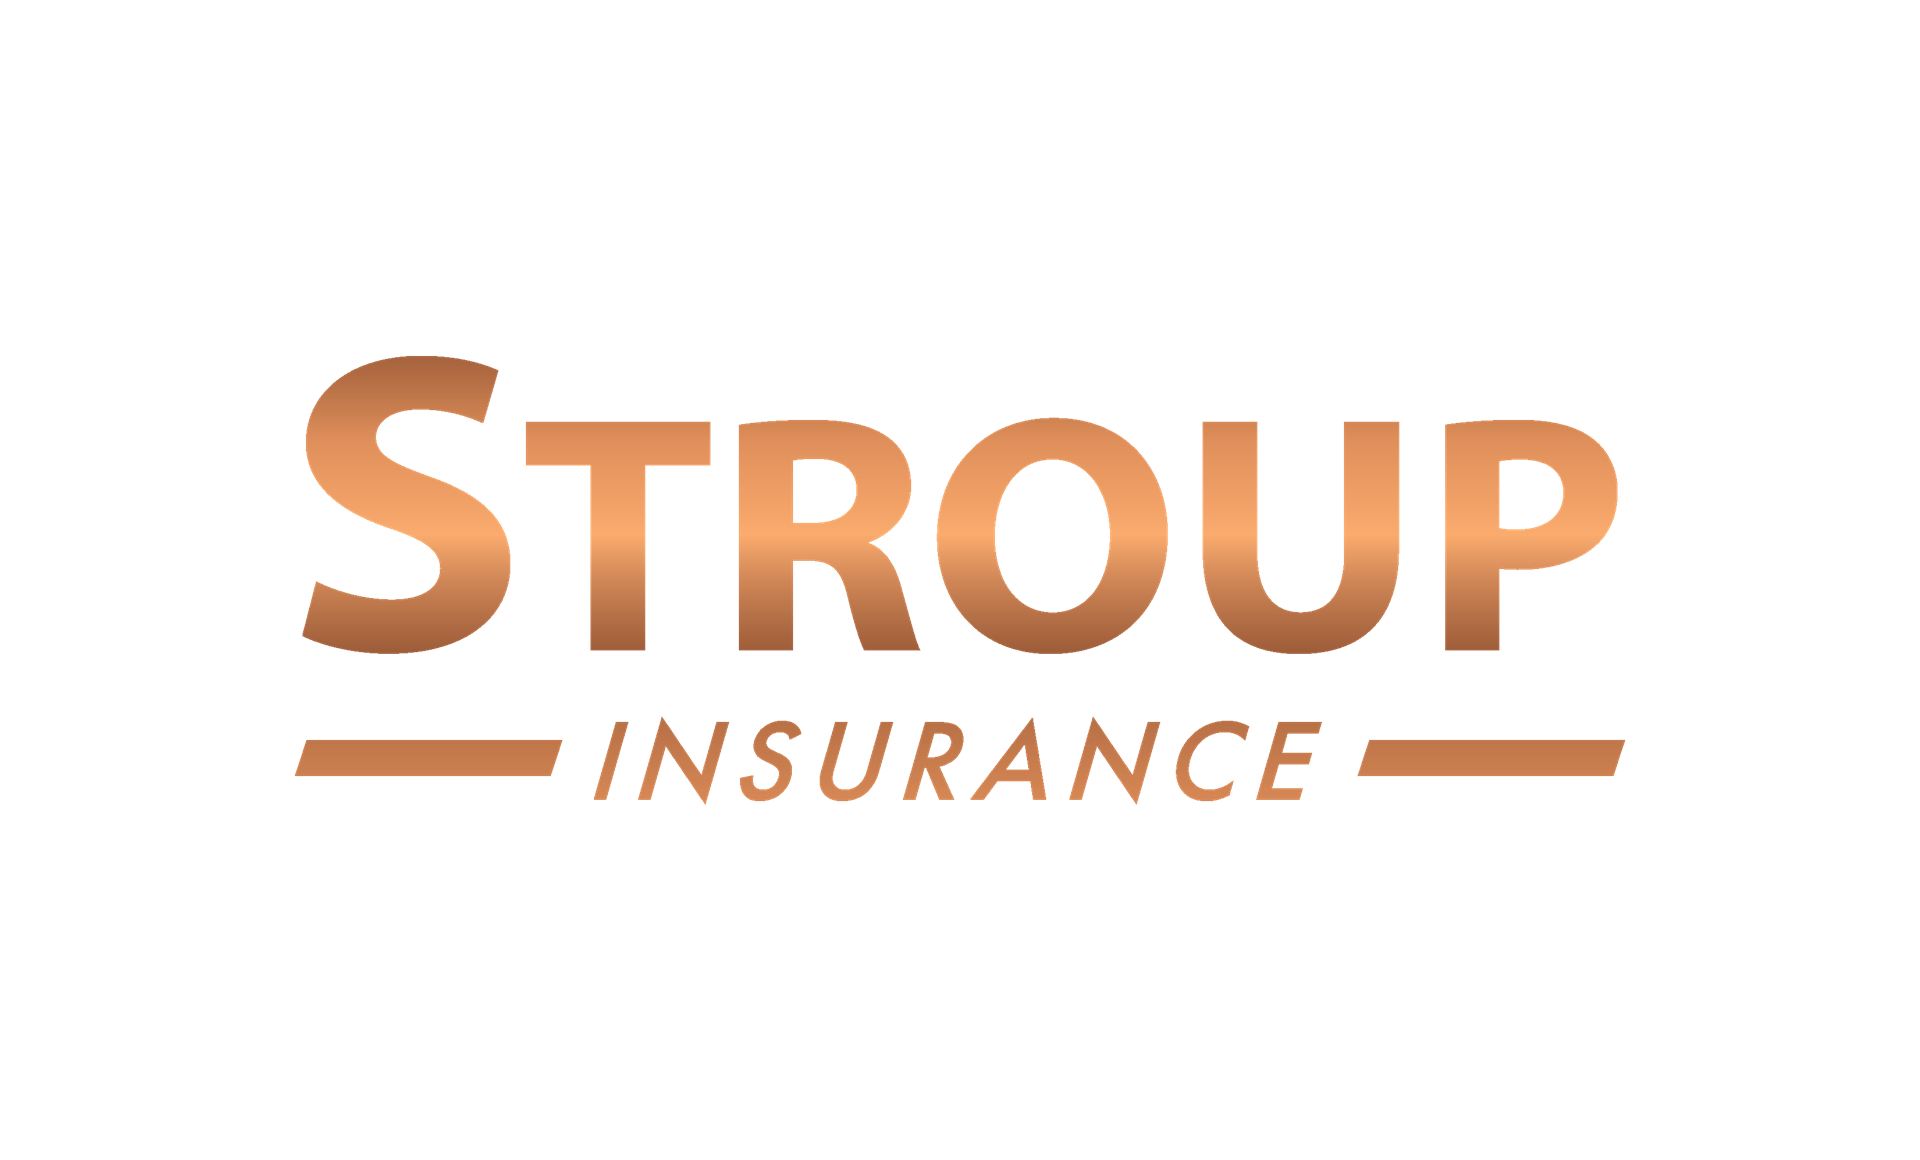 Stroup Insurance